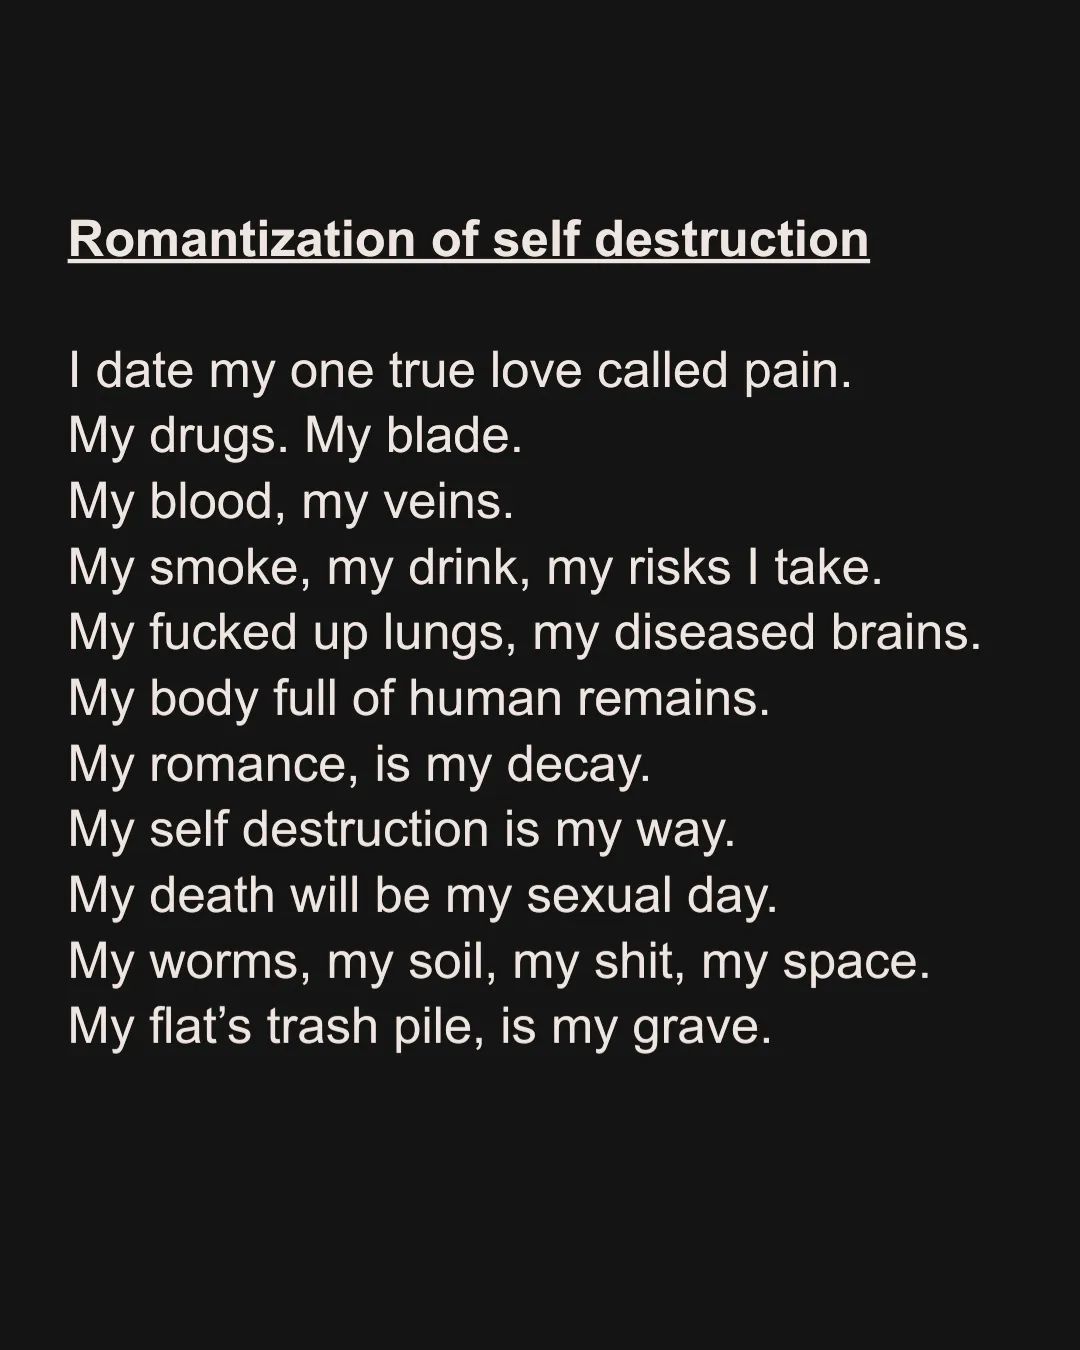 Romantization of self destruction.
.
.
.
.
.
#poet #poetry #poem #selfdestruction #romance #love #romantic #blood #pain #suffering #art #writer #dark #darkness #hate